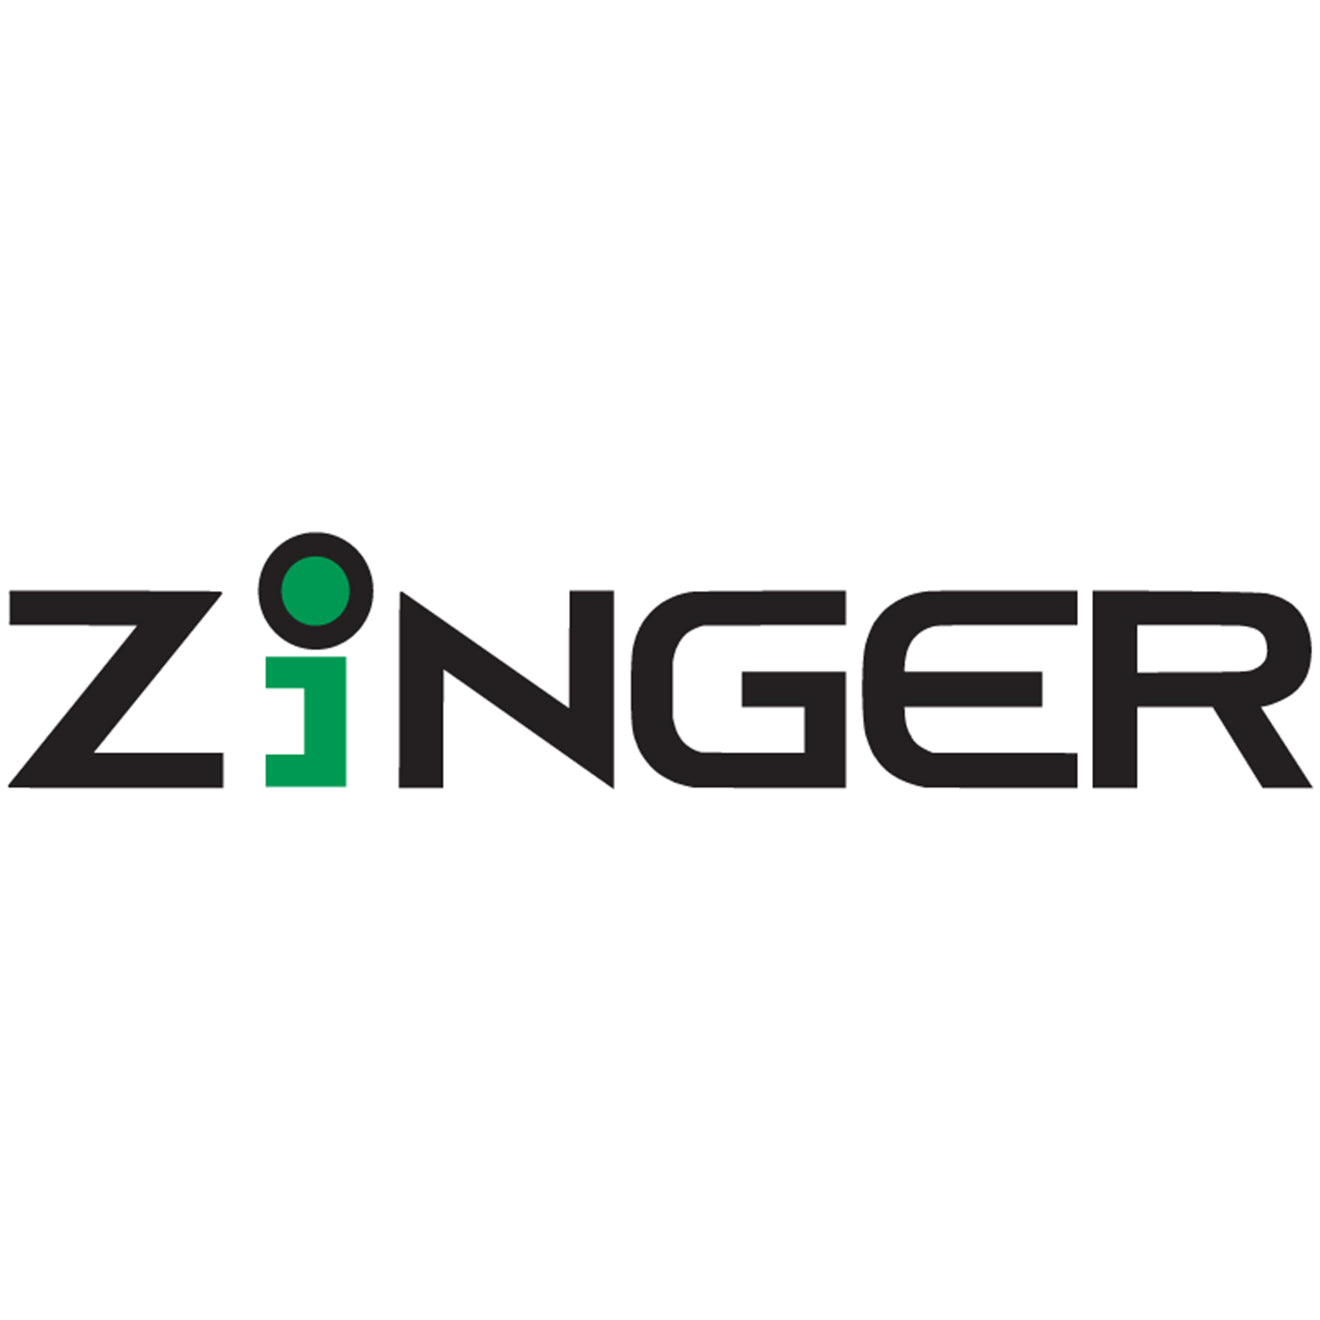 Zinger Winger